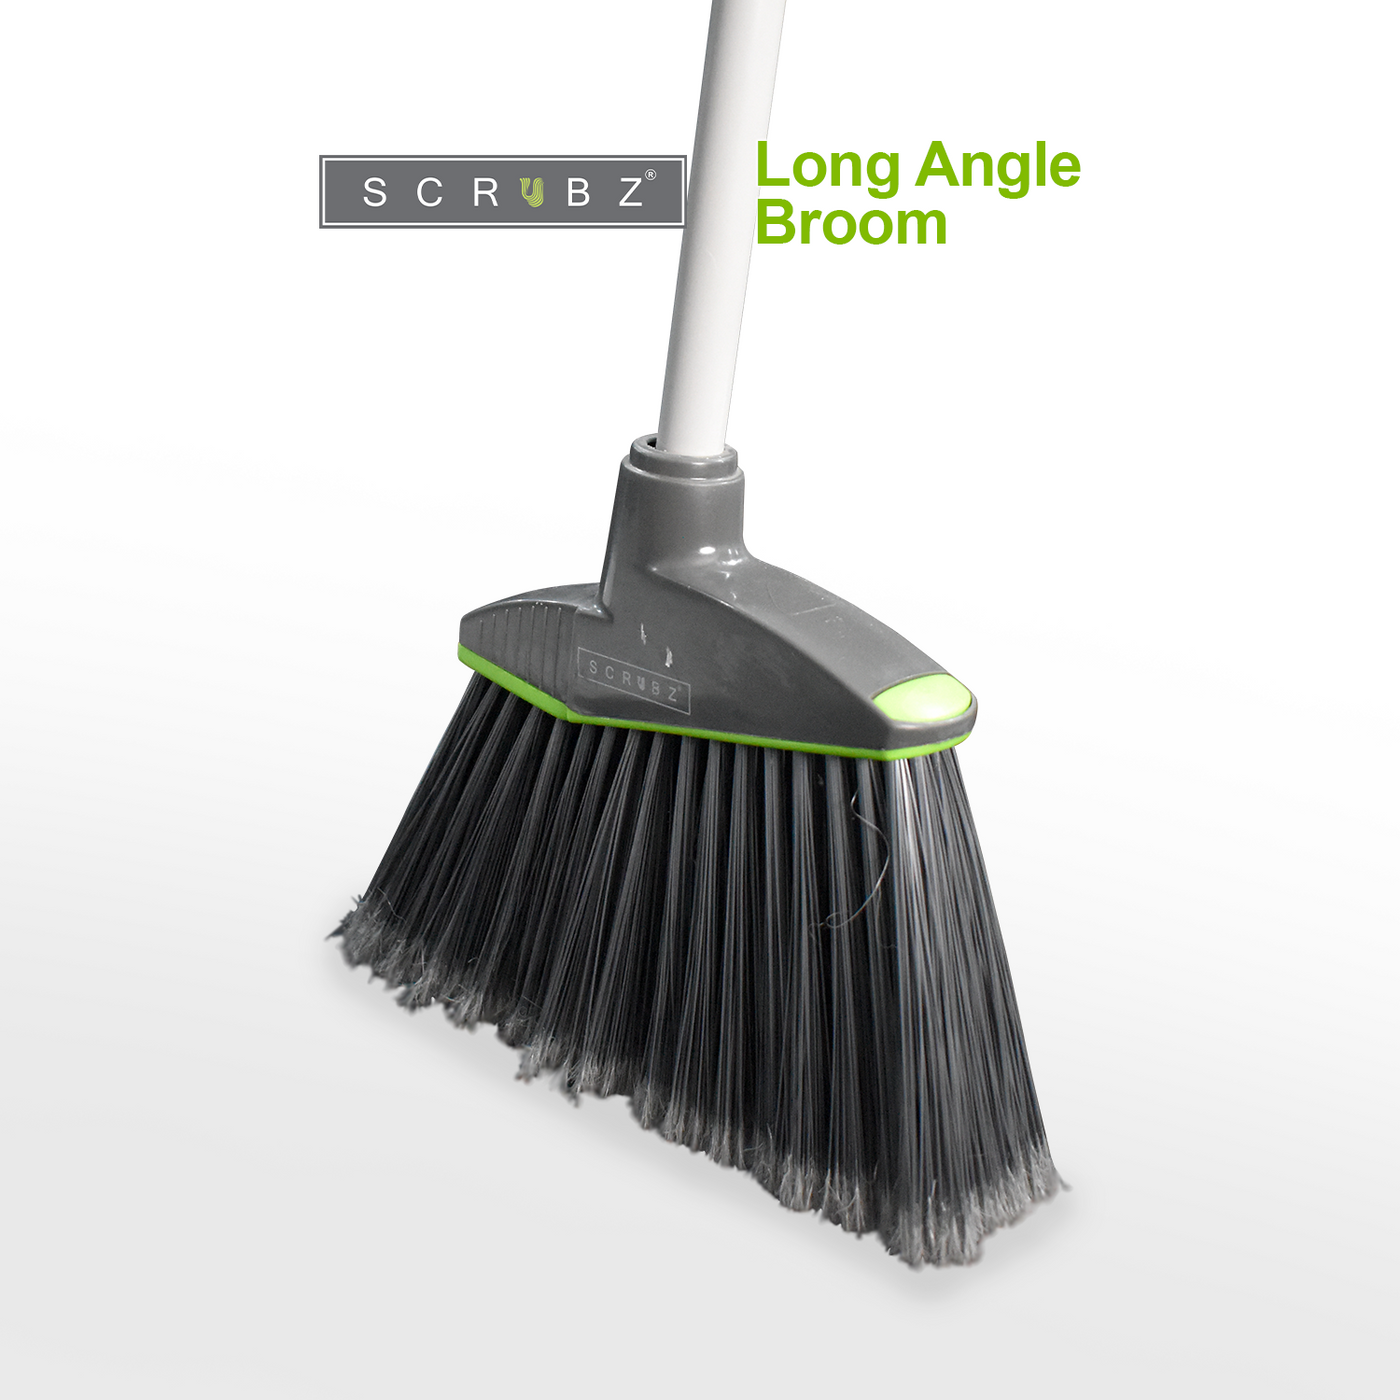 SCRUBZ Premium Long Angle Broom